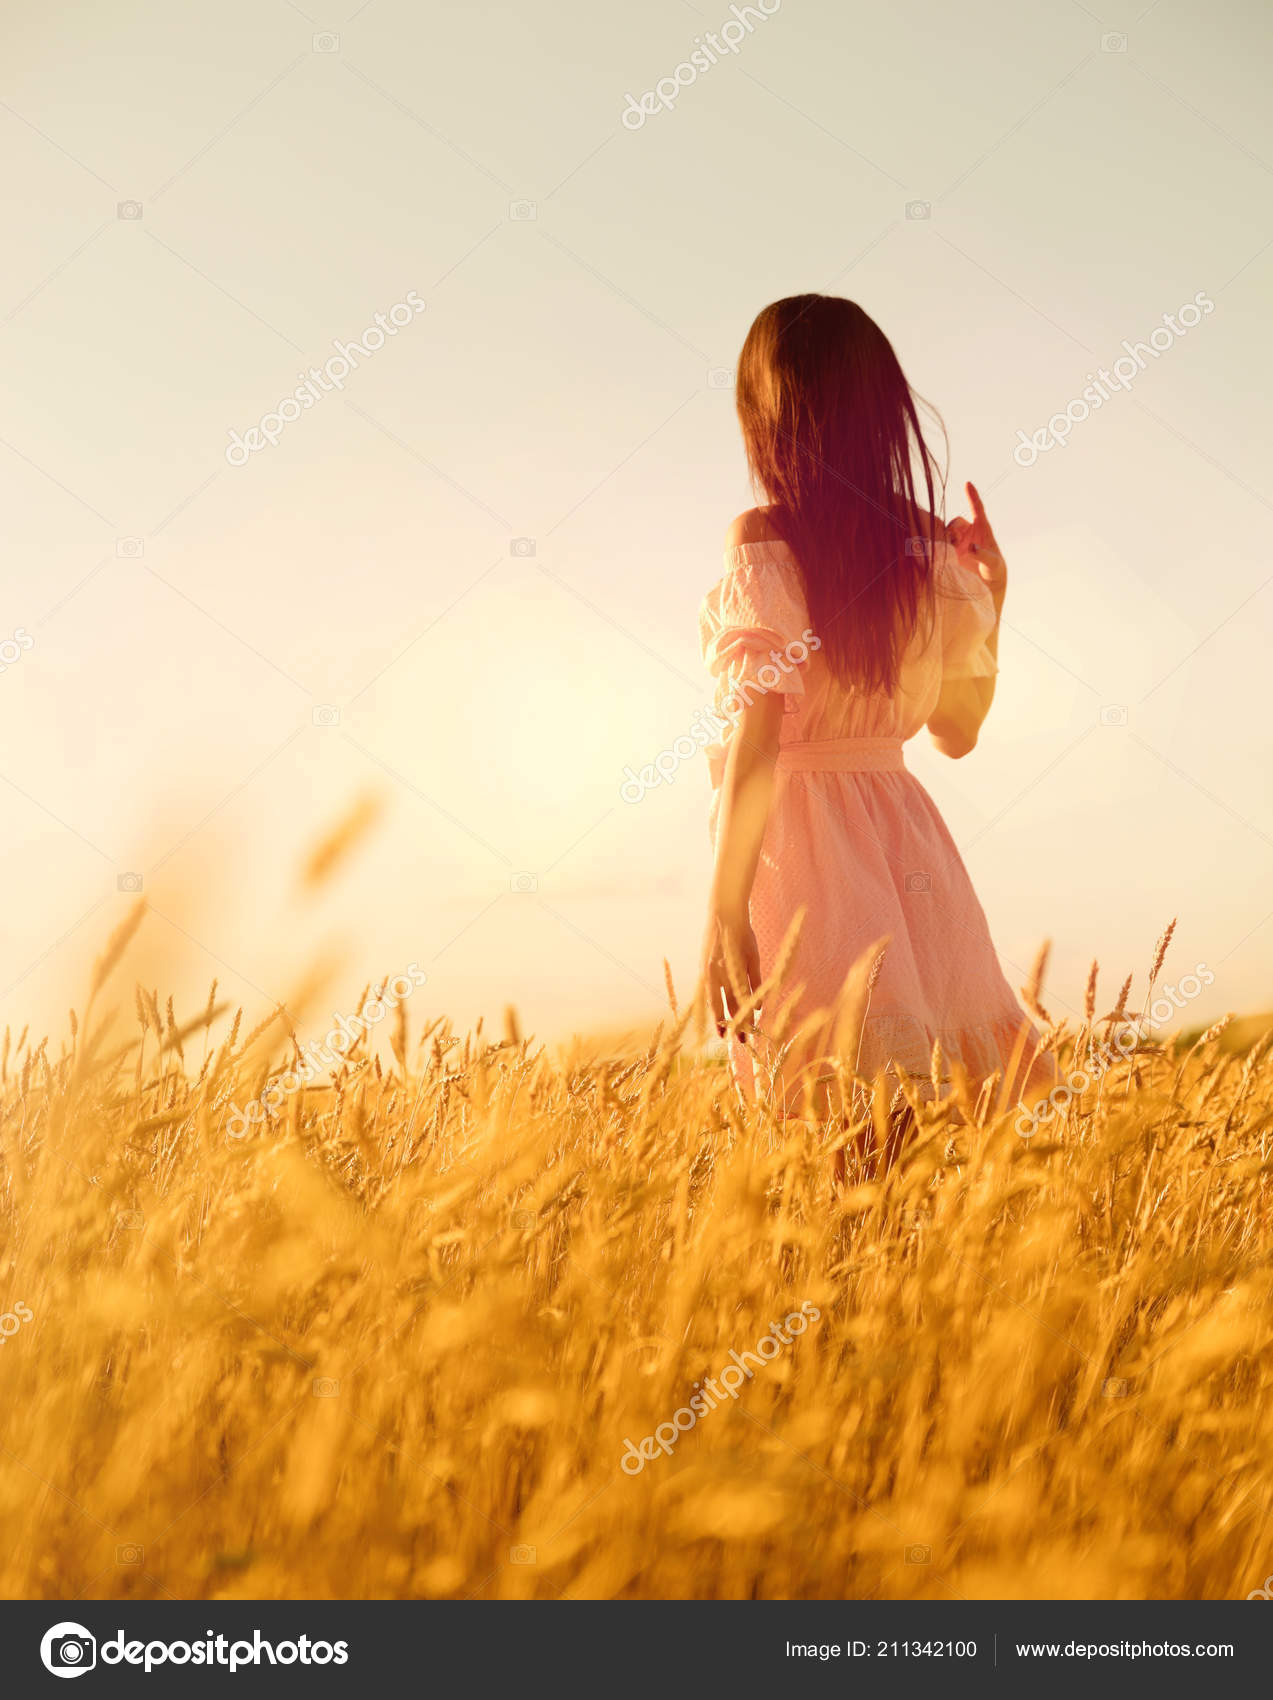 girl in field sunset